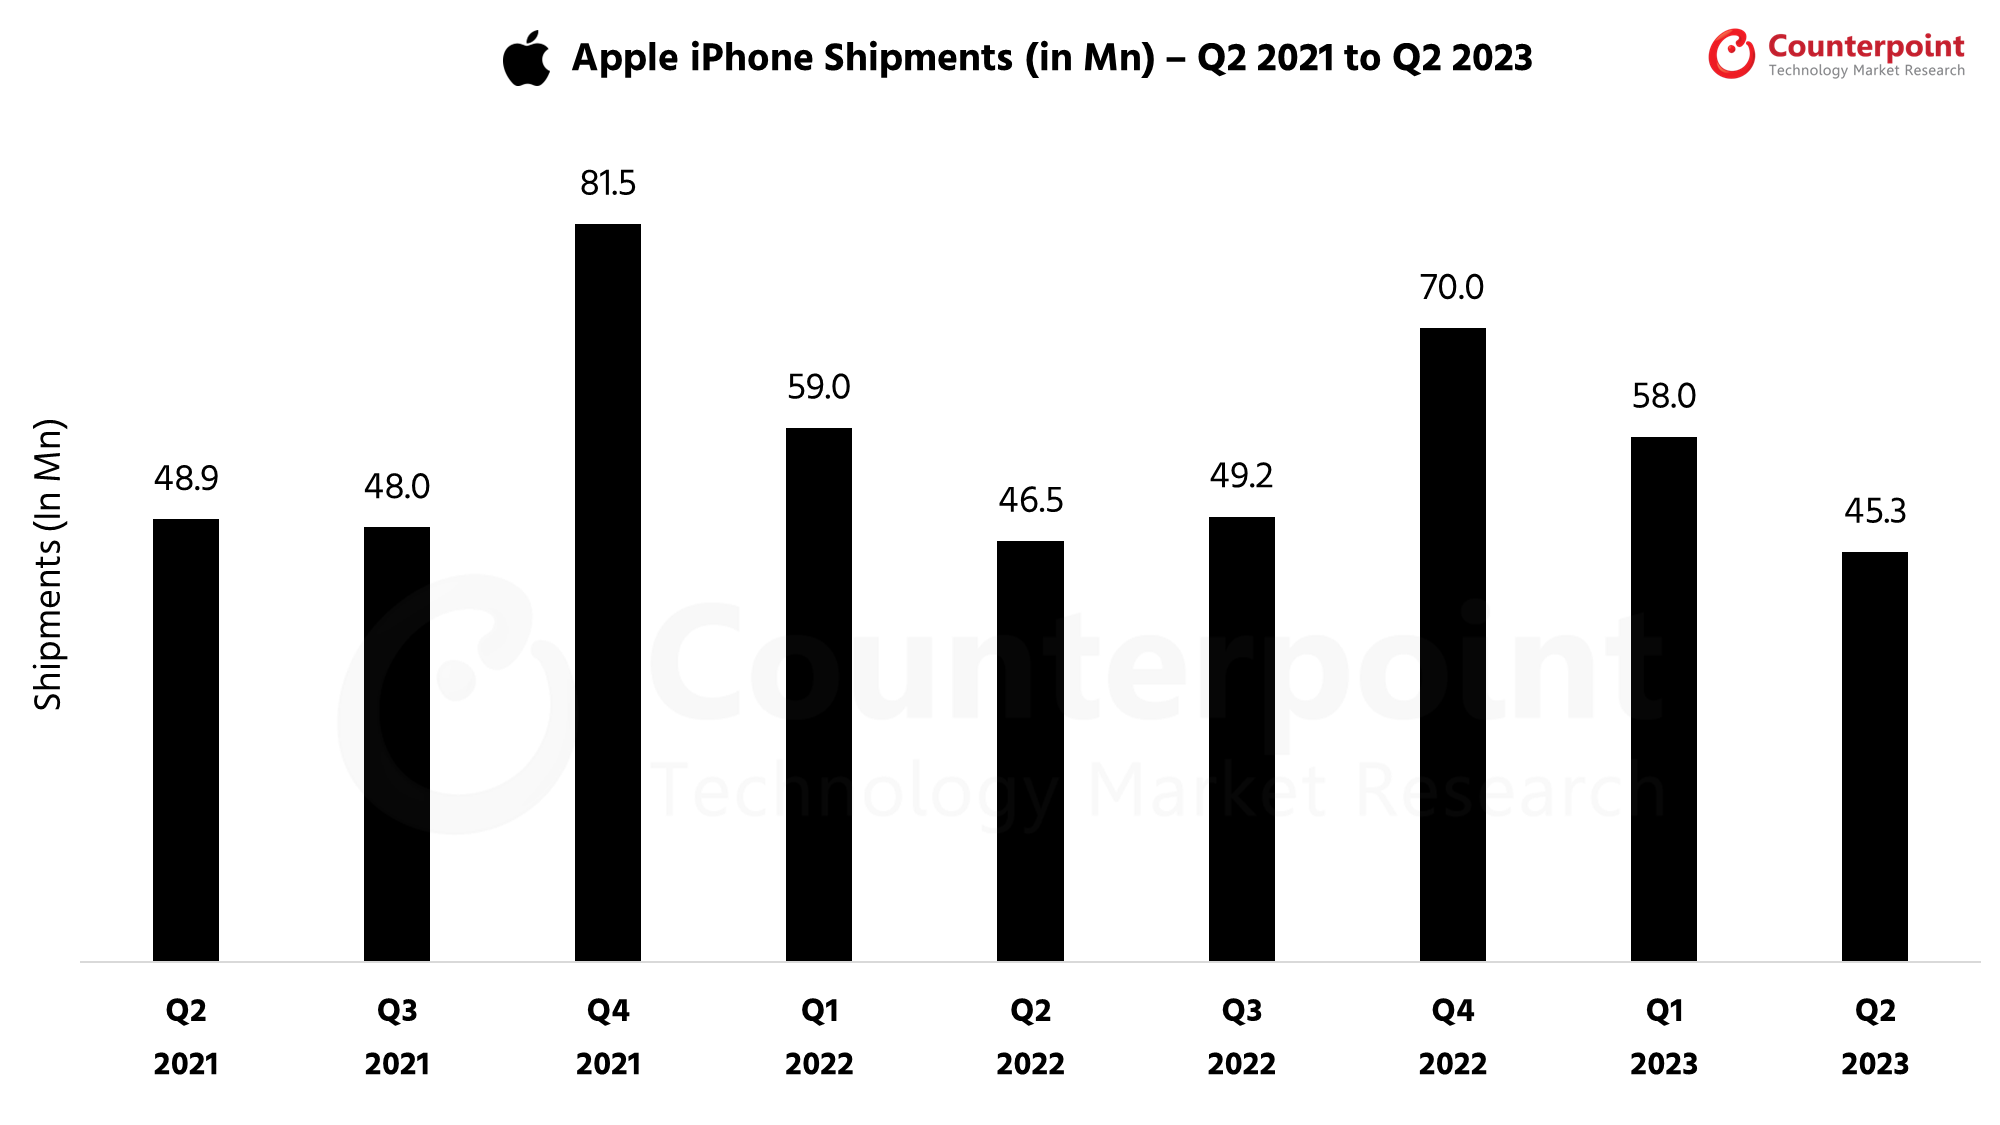 Apple iPhone Shipments Q2 2023